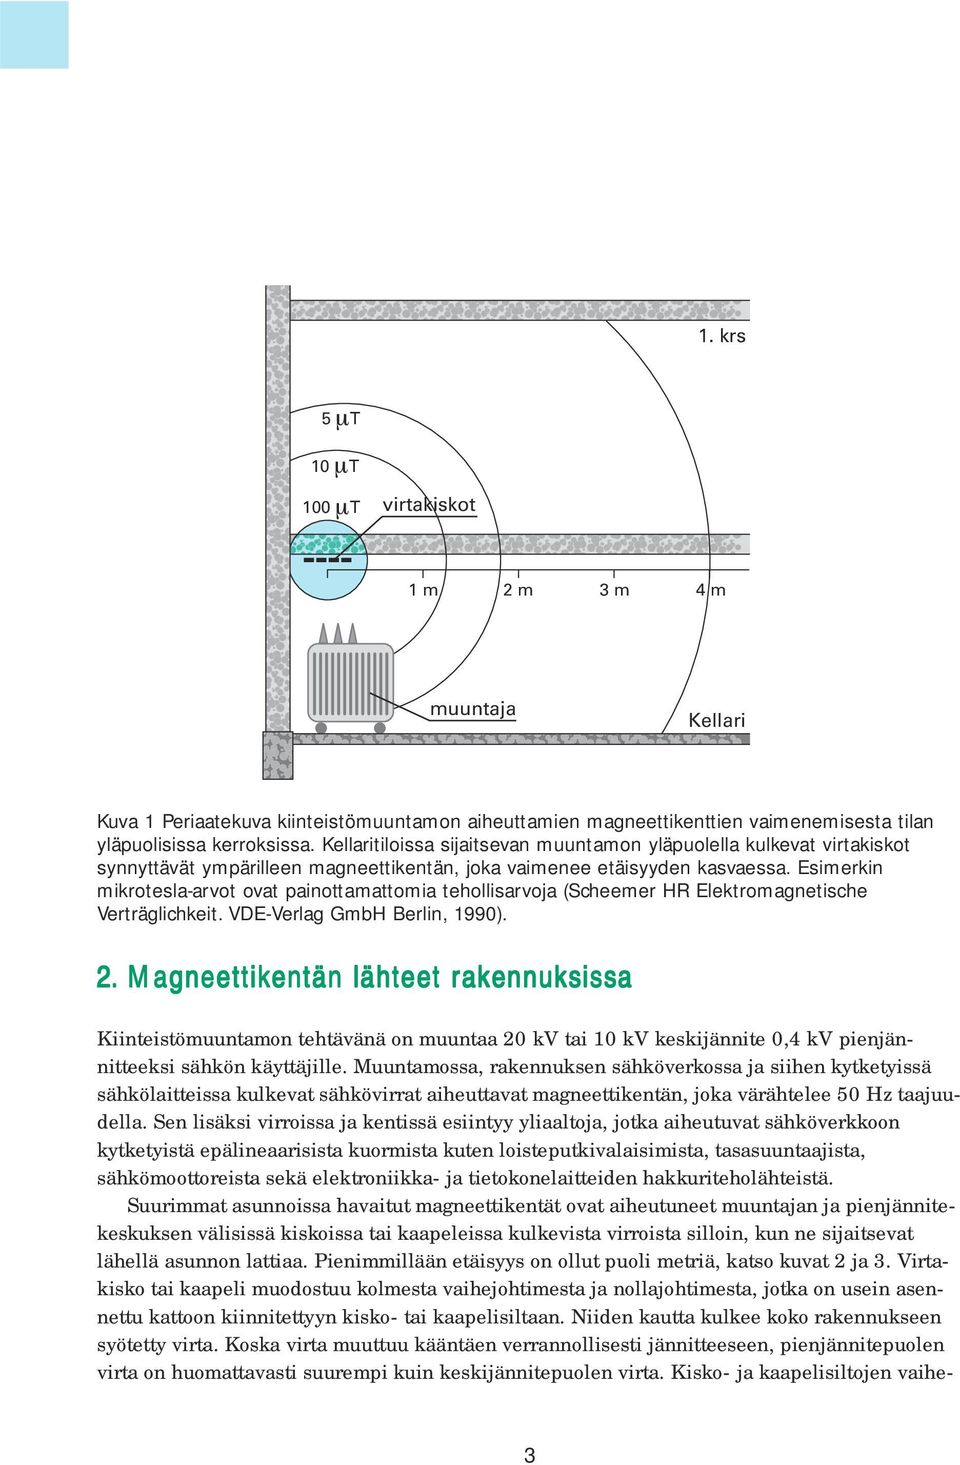 Esimerkin mikrotesla-arvot ovat painottamattomia tehollisarvoja (Scheemer HR Elektromagnetische Verträglichkeit. VDE-Verlag GmbH Berlin, 1990). 2.